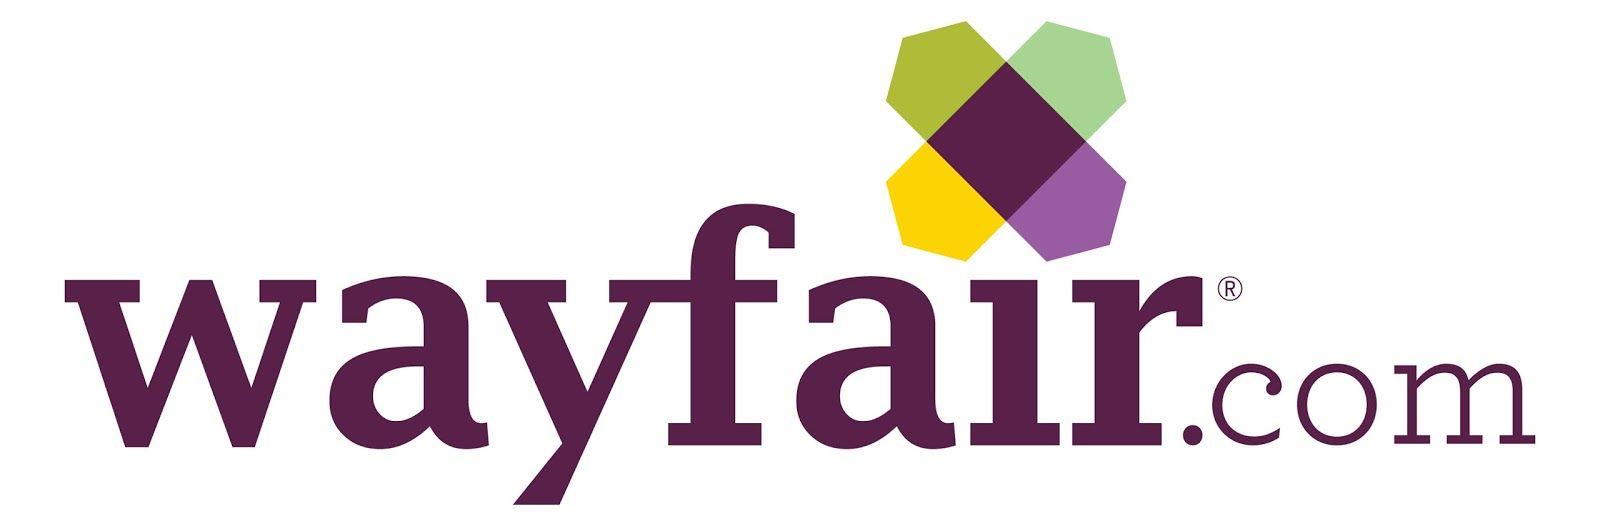 Wayfair.com Logo - Wayfair.com-Logo-Without-Tagline-1 – Colección Rosabel